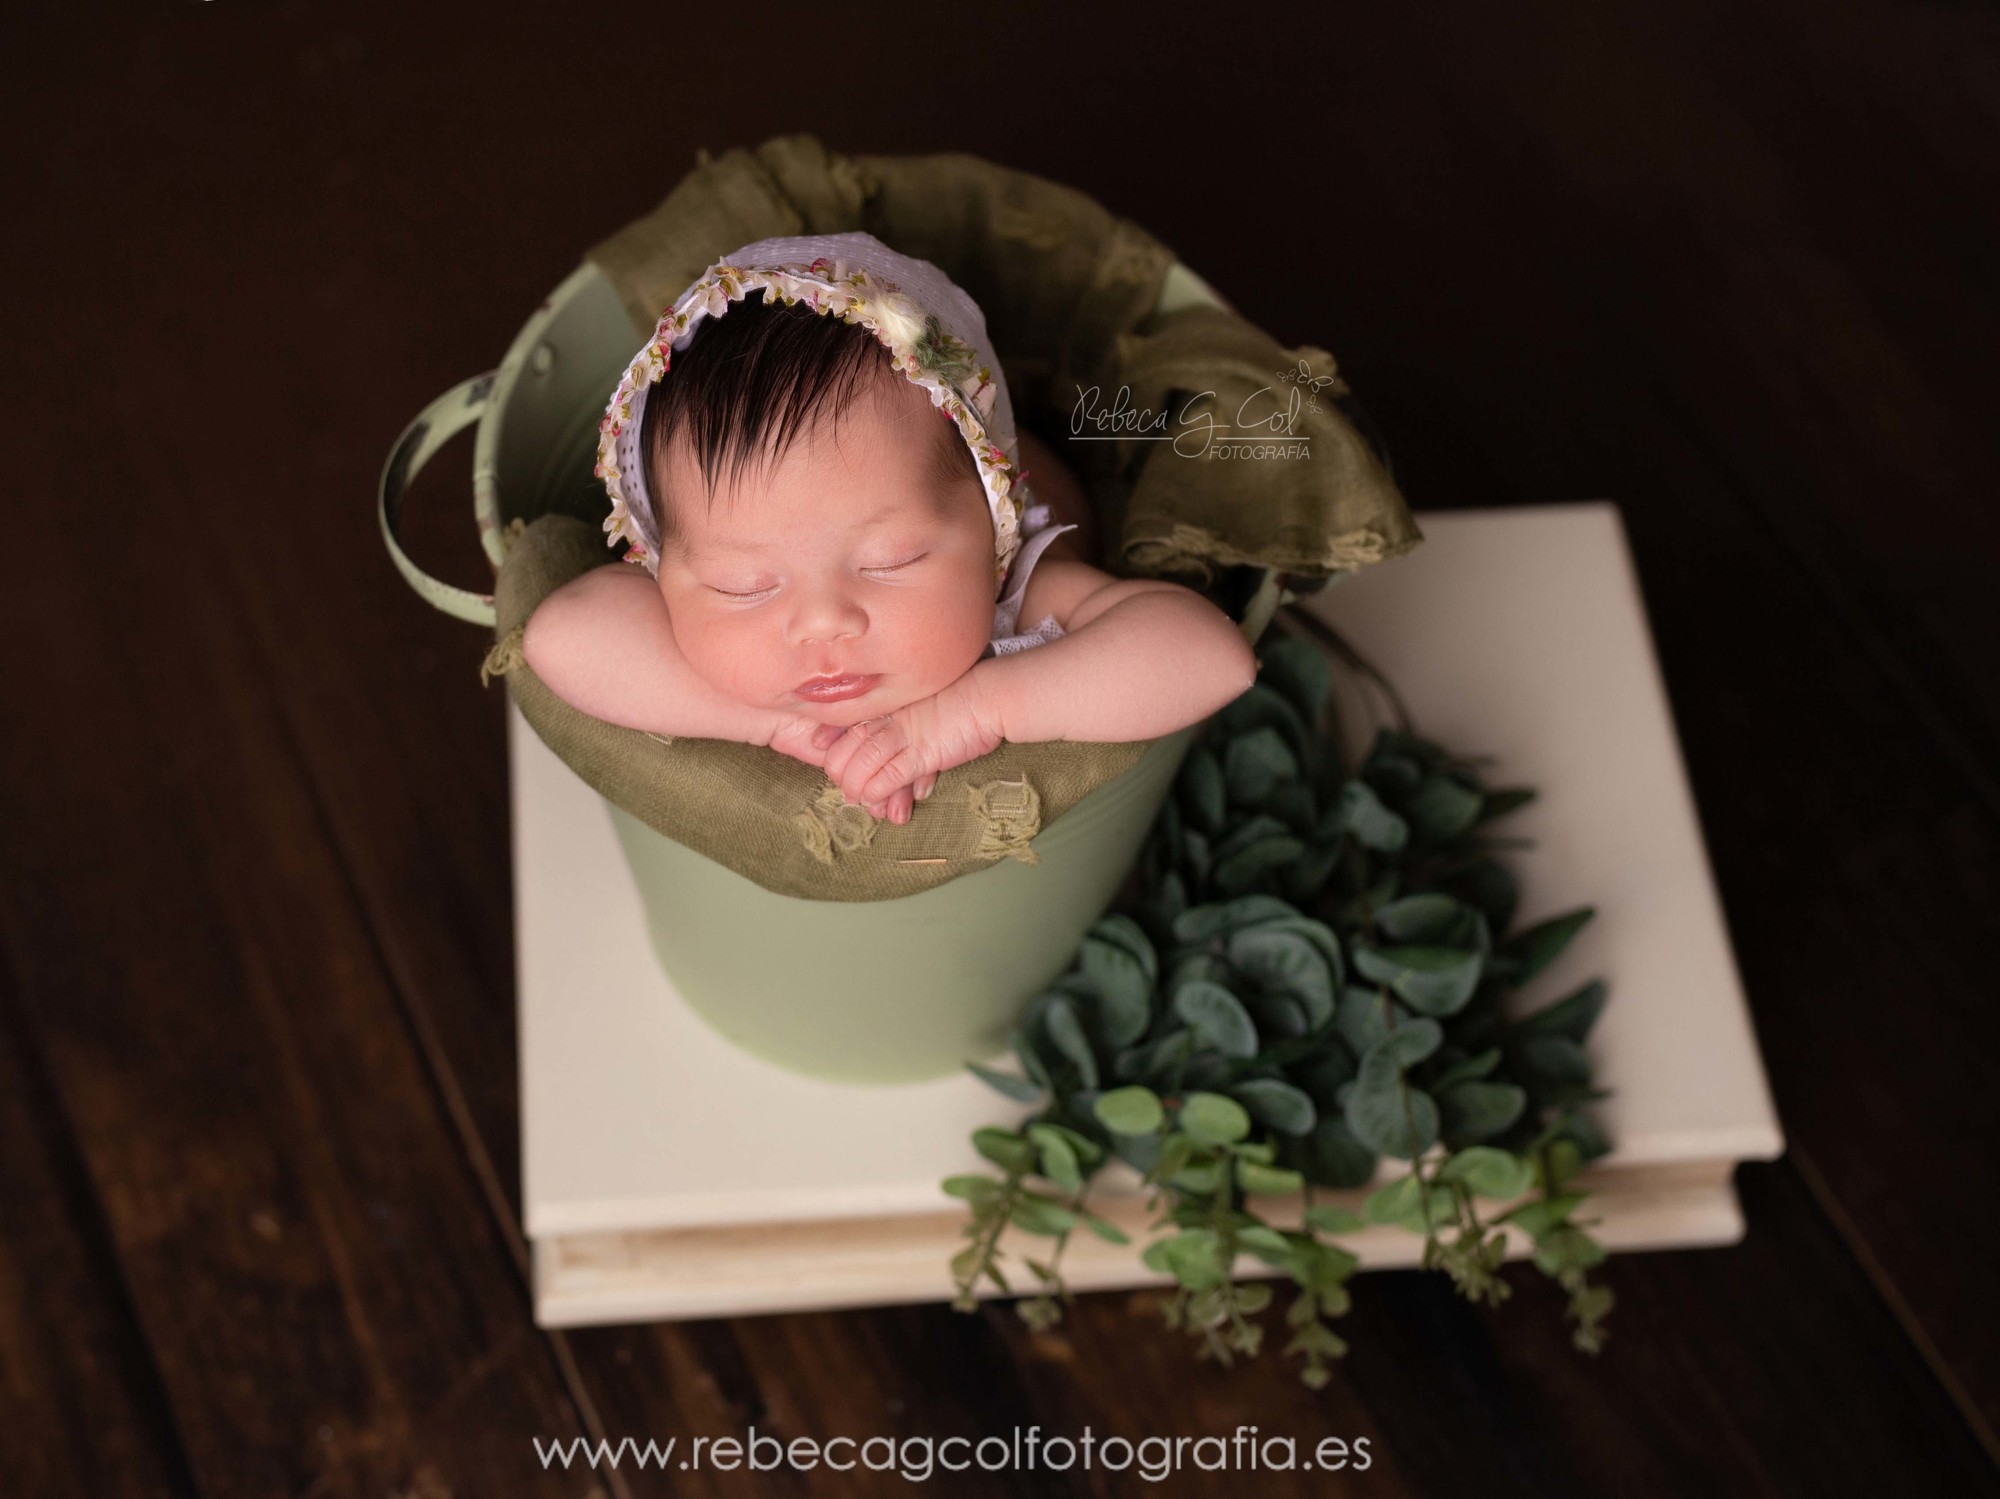 Rebeca GCol Fotografía - fotografia-recien-nacido-newborn-madrid-alcala-de-henares-267.jpg